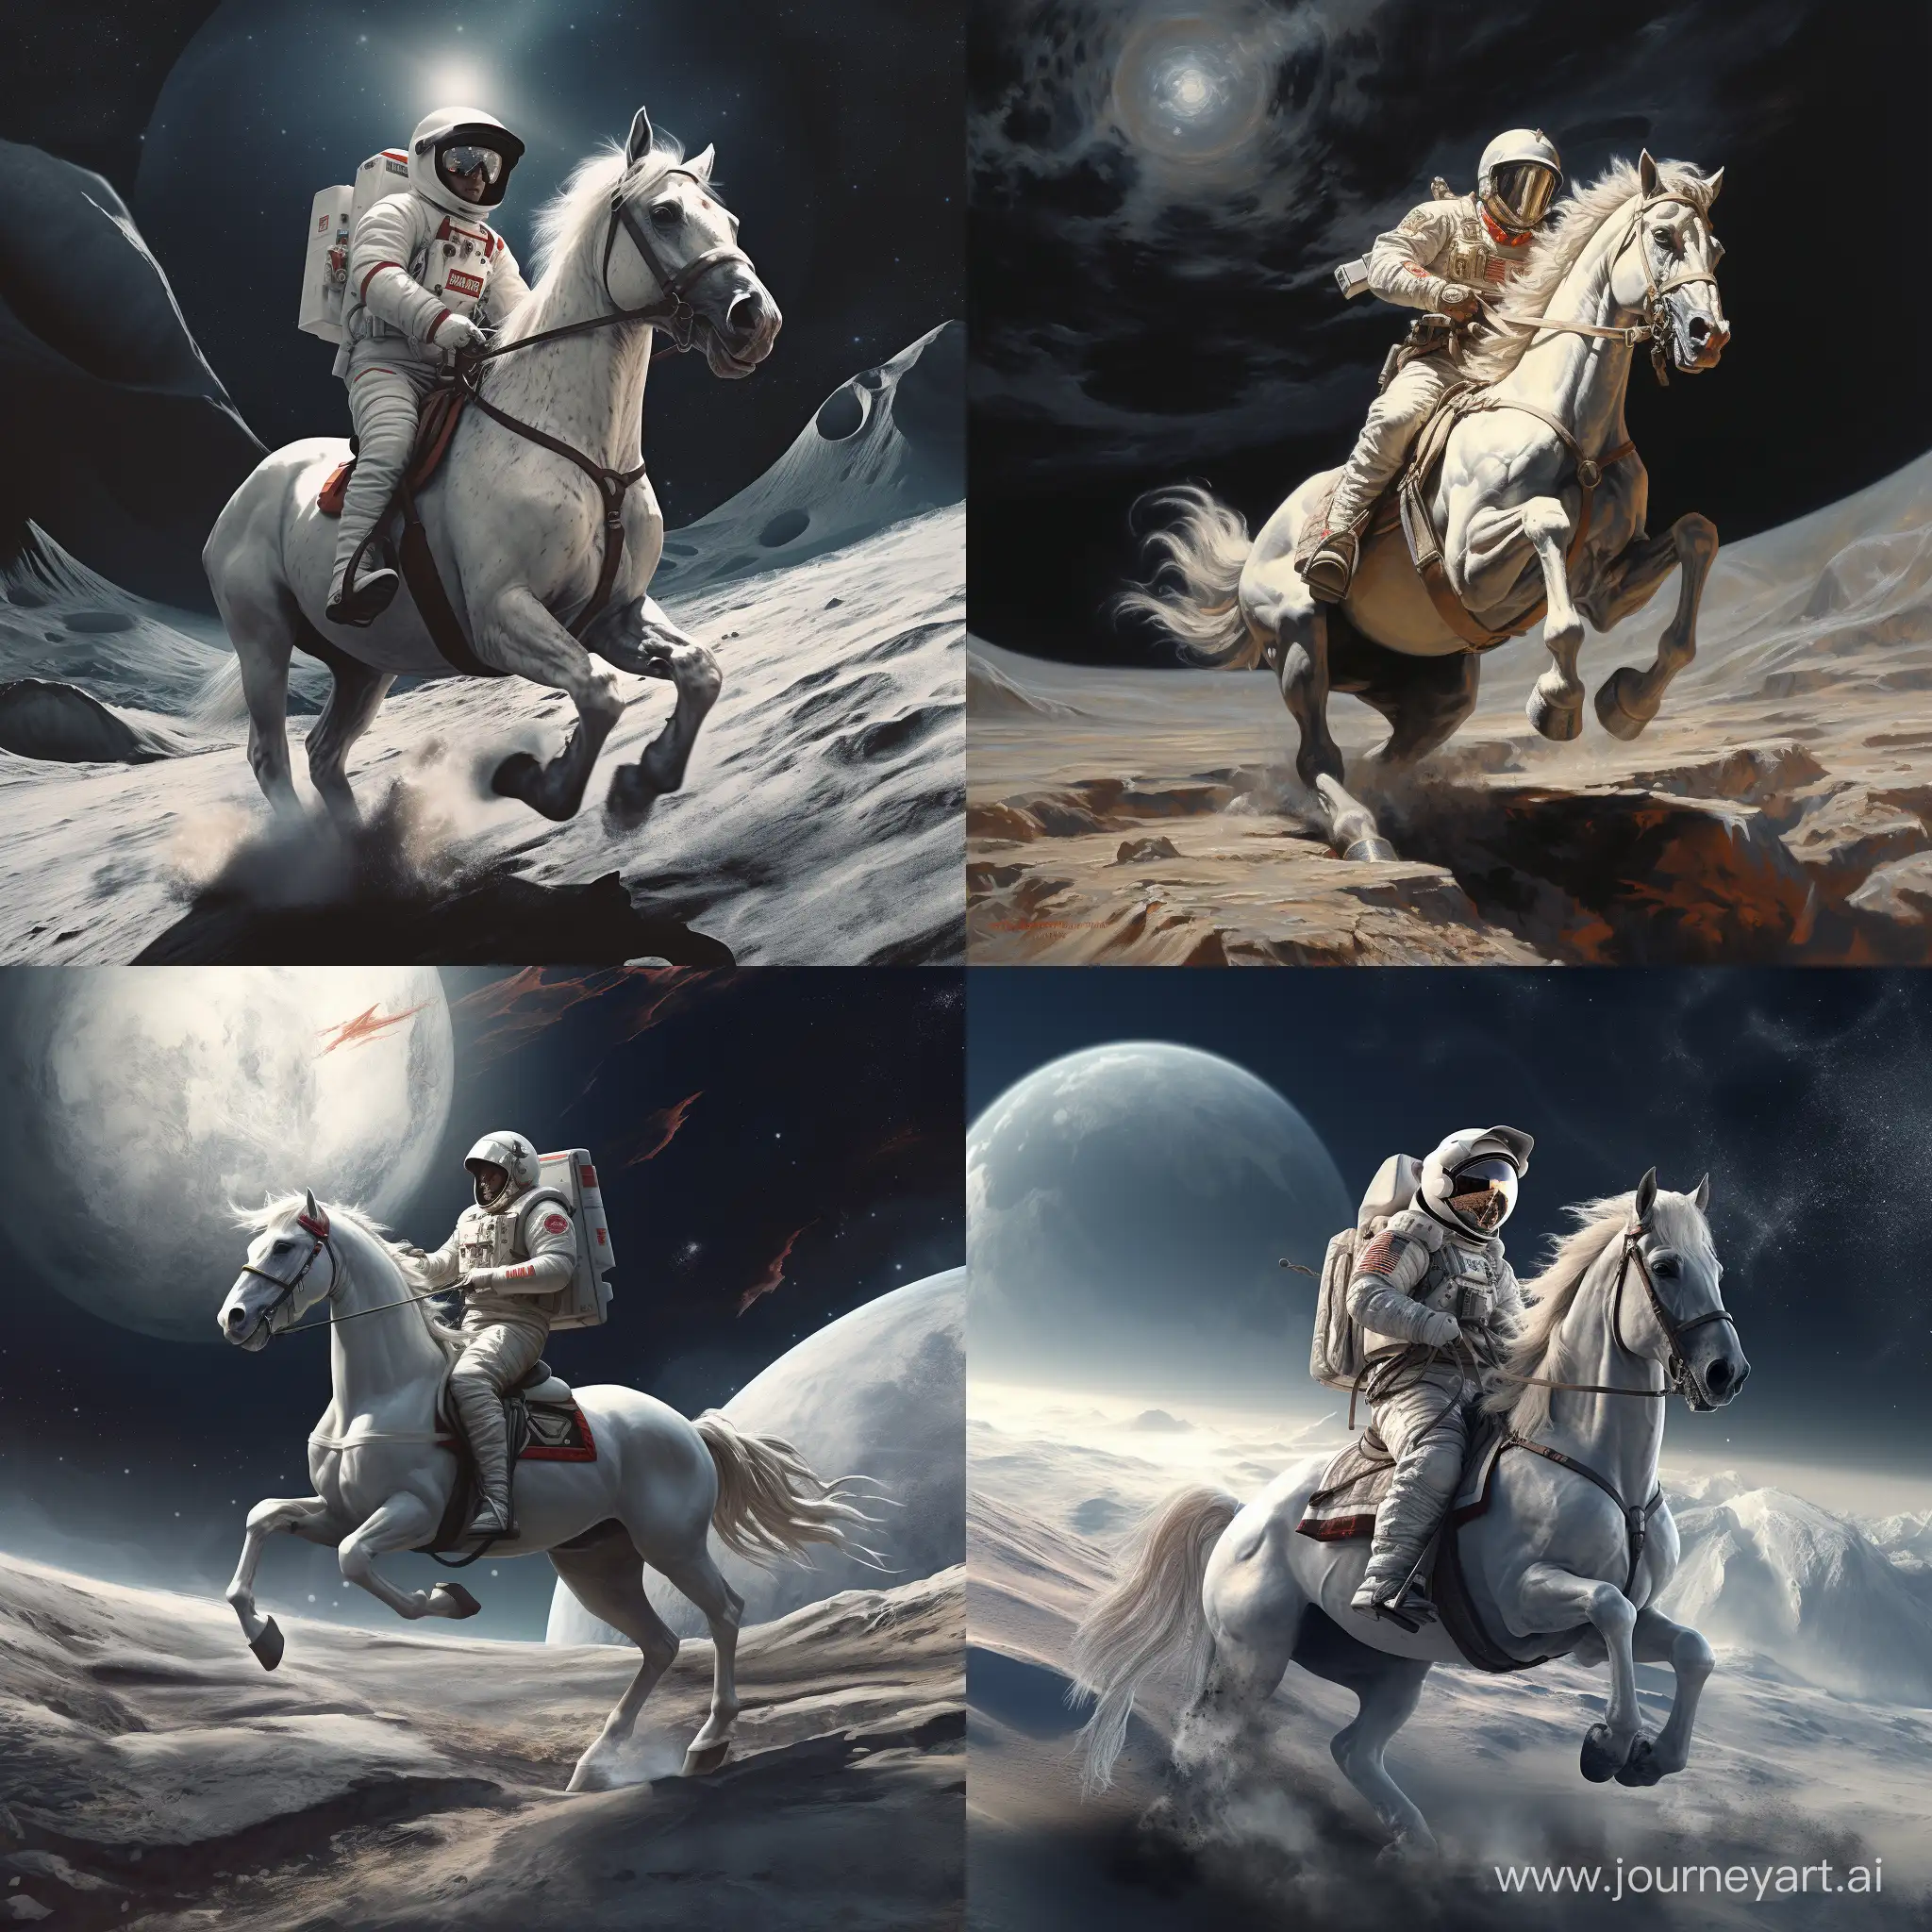 an austronaut riding a white horse on a moon